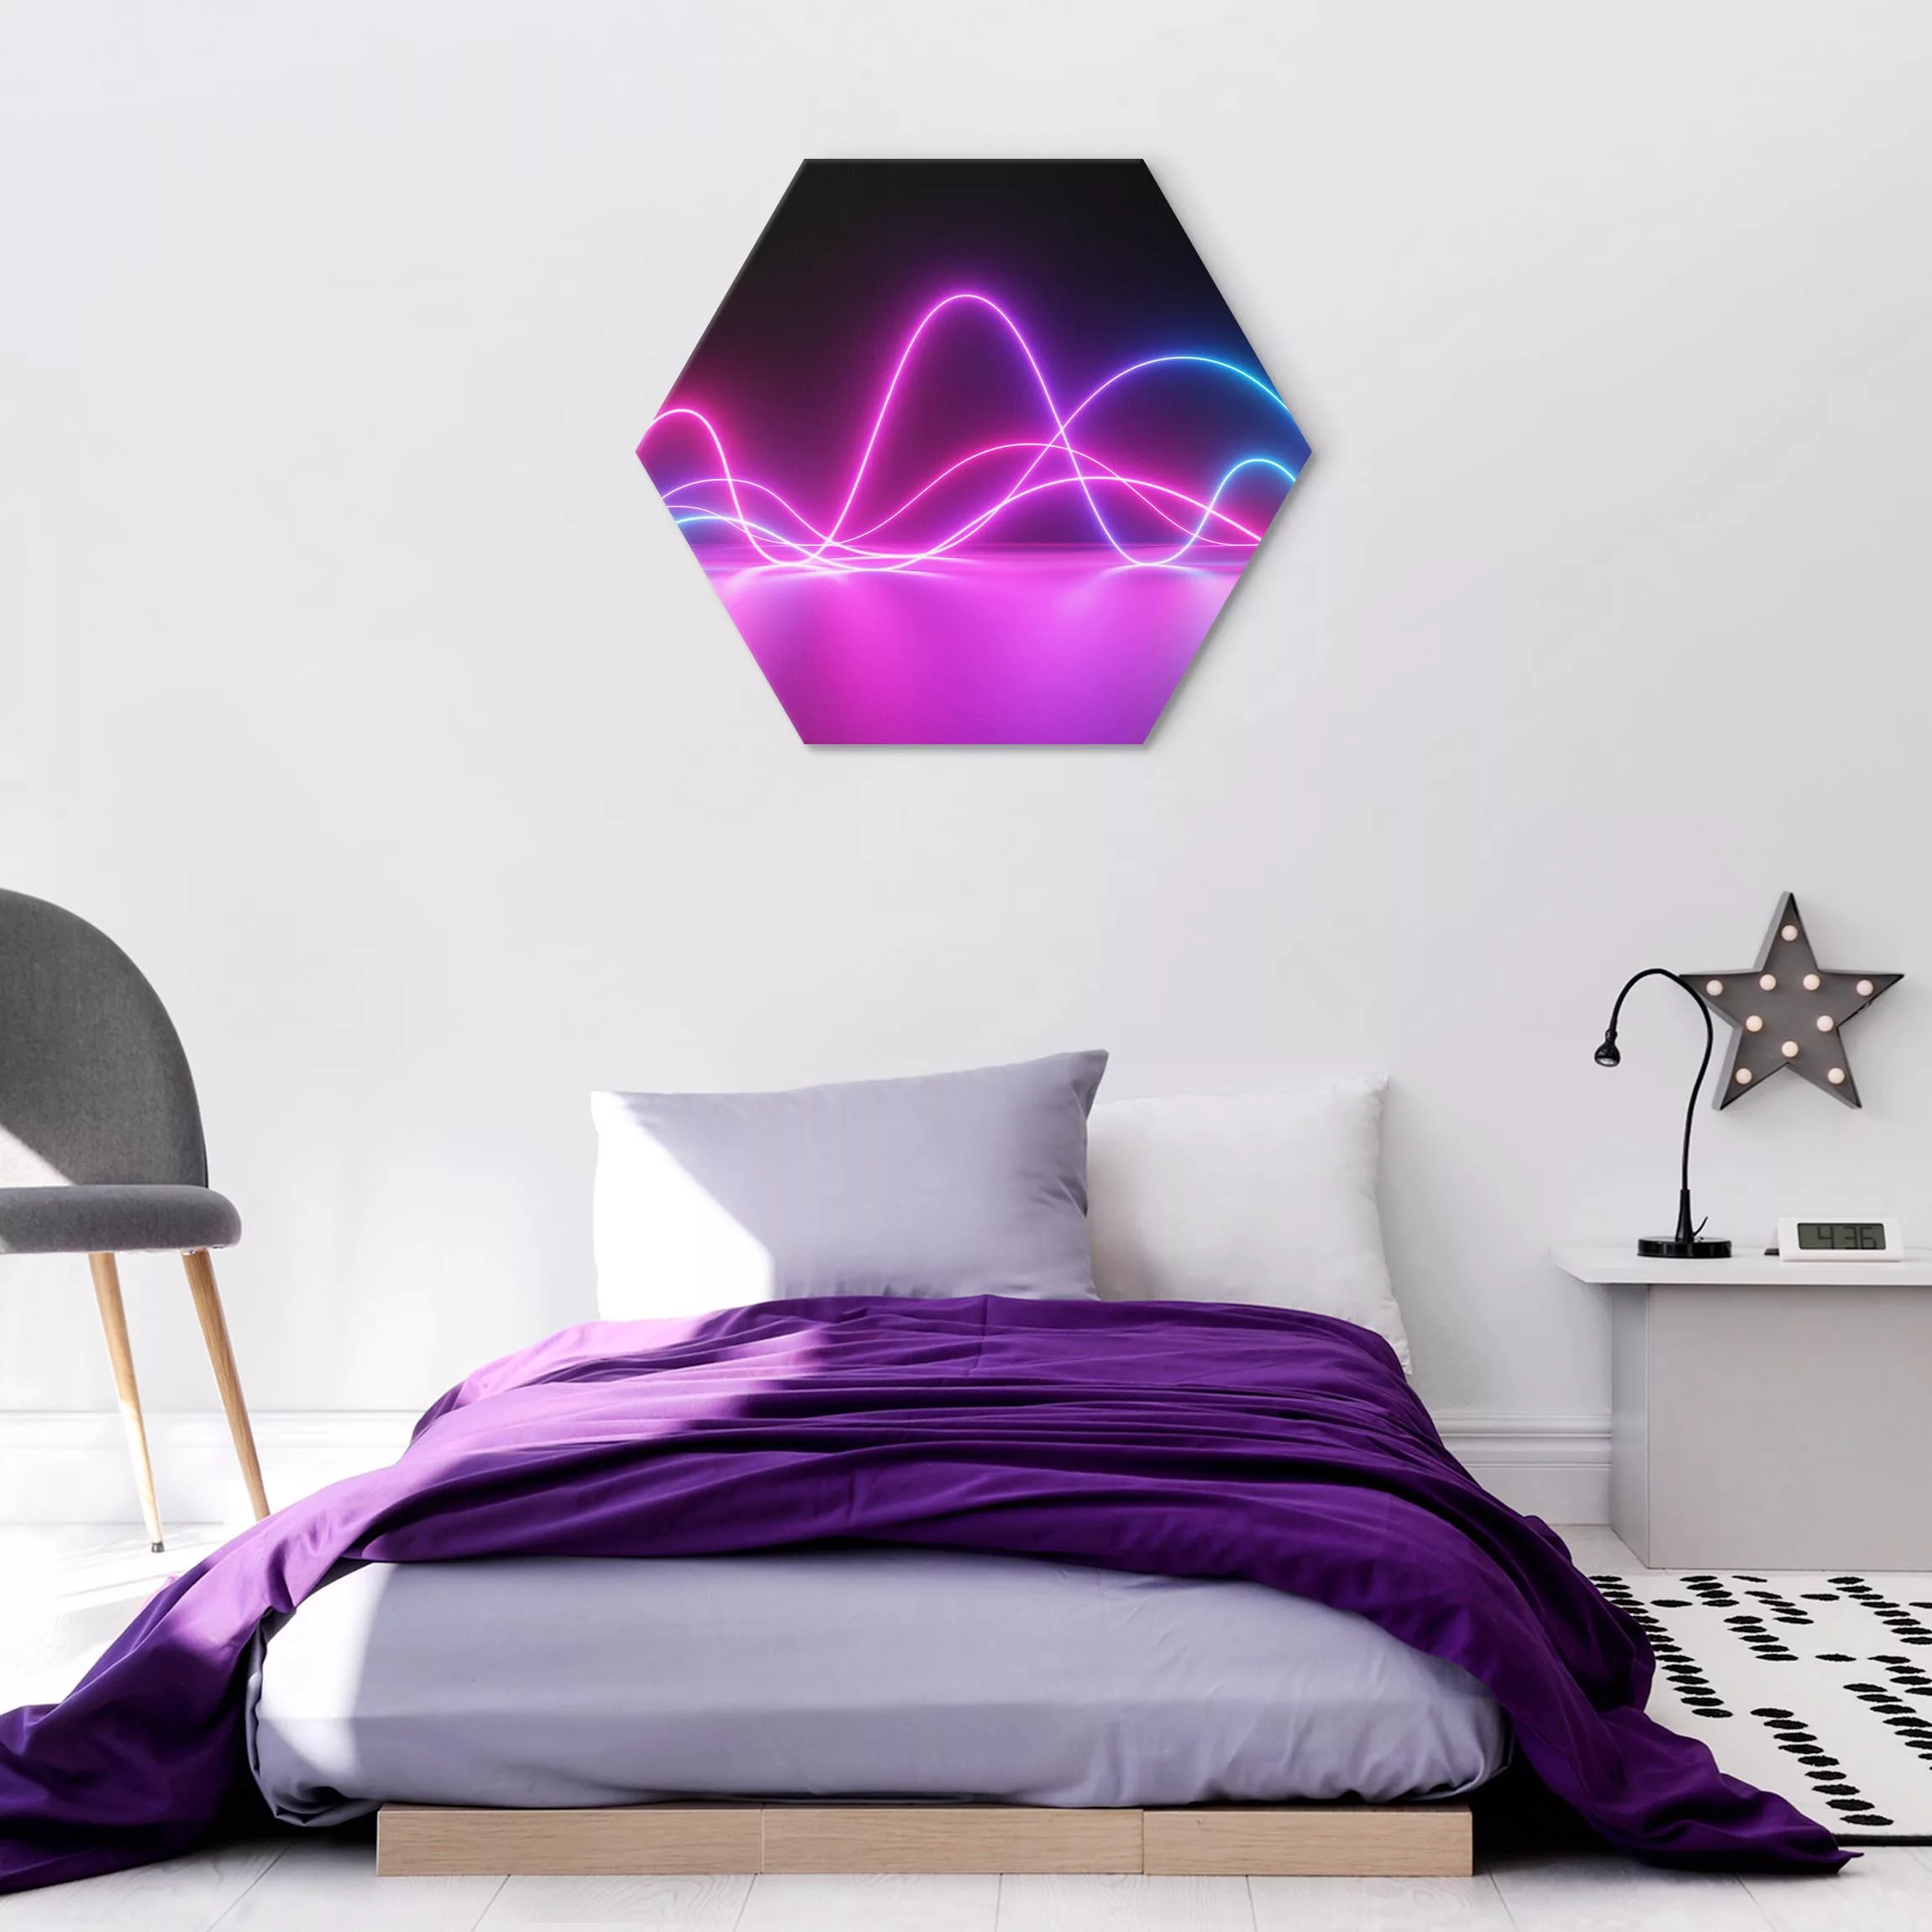 Hexagon-Alu-Dibond Bild Neonwellen günstig online kaufen